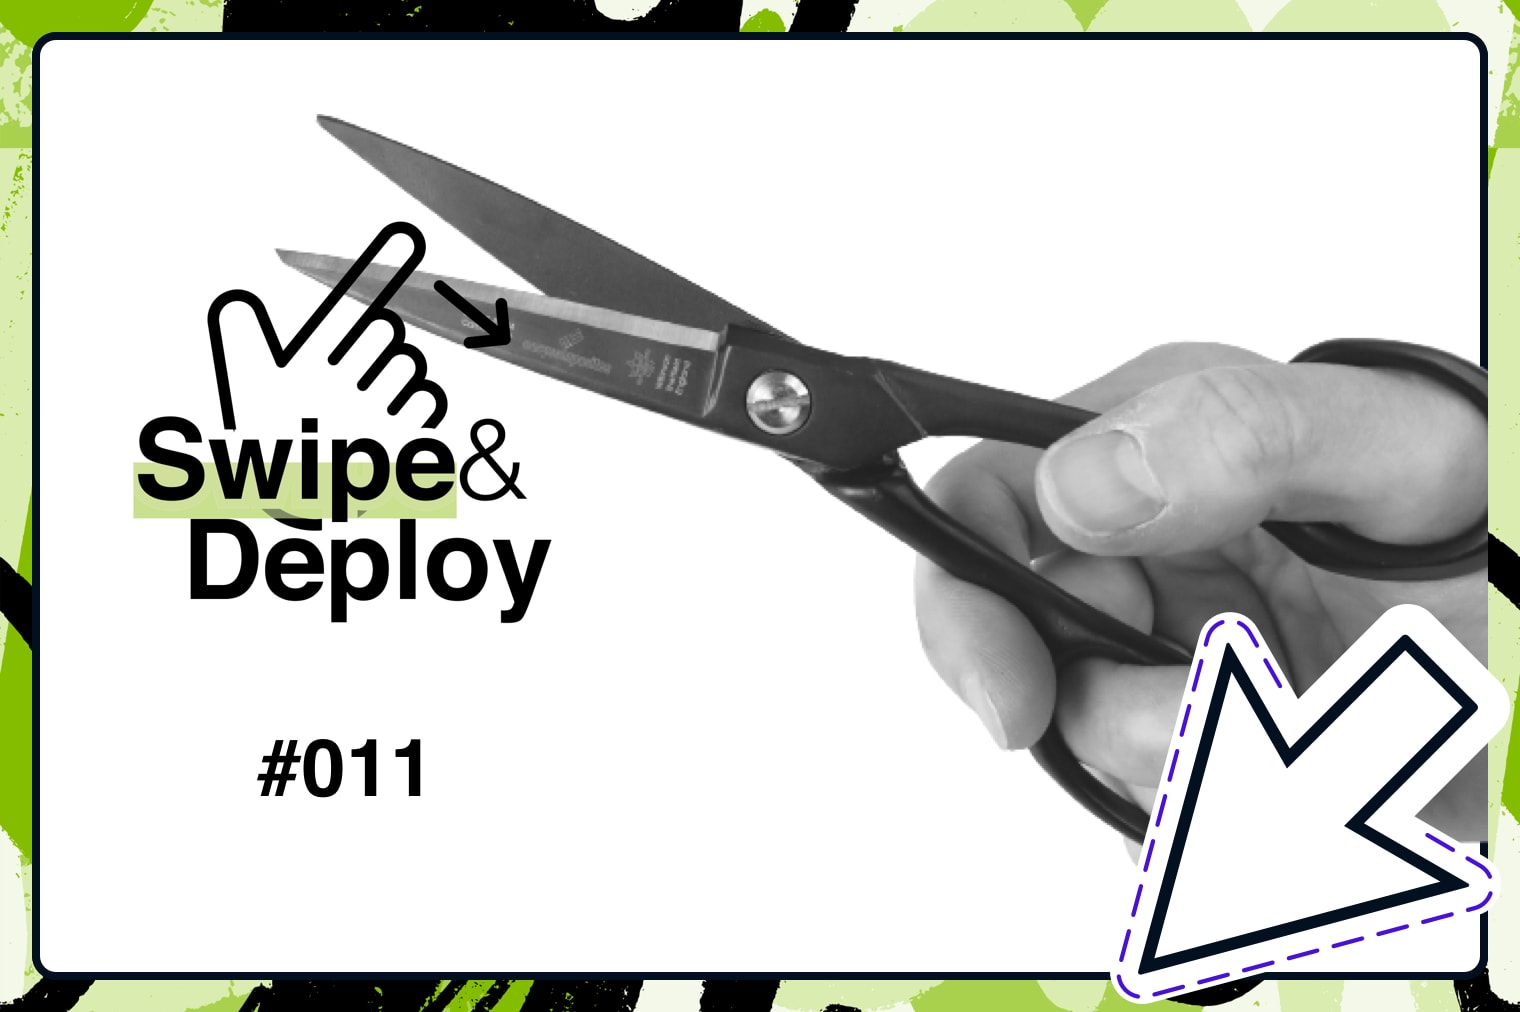 Swipe & Deploy 11 blog hero image of hand holding scissors.